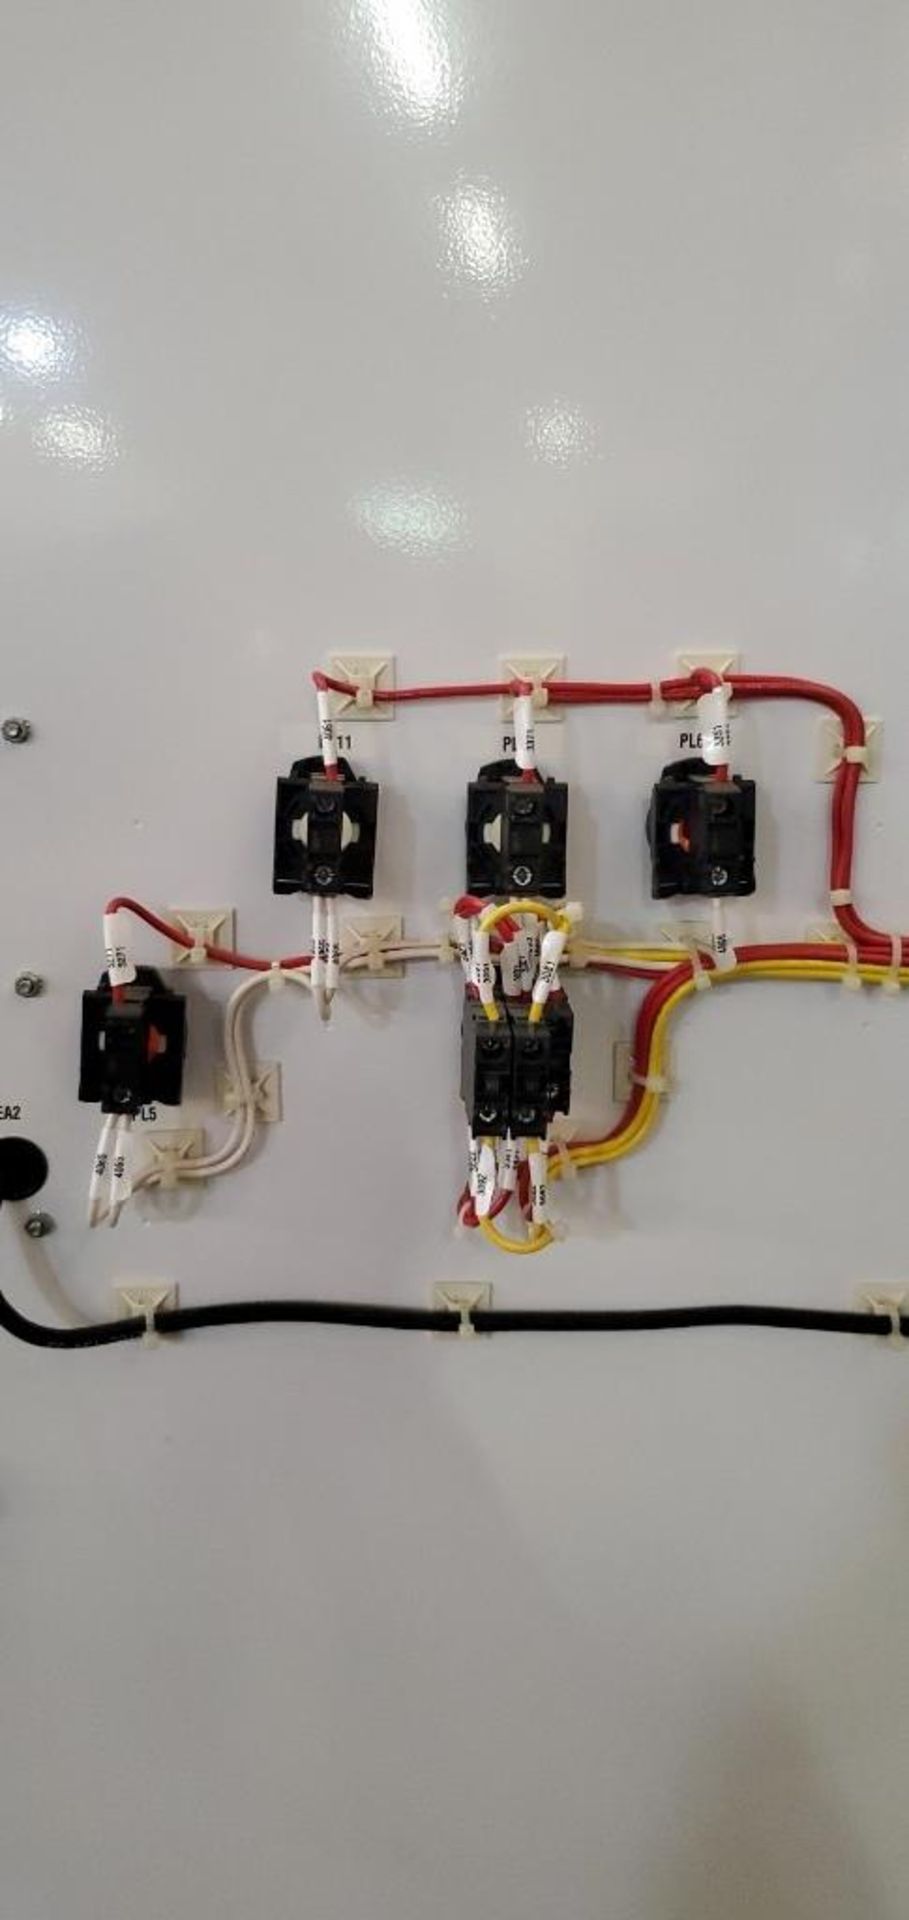 Allen-Bradley Power Flex Control Cabinet - Image 3 of 4